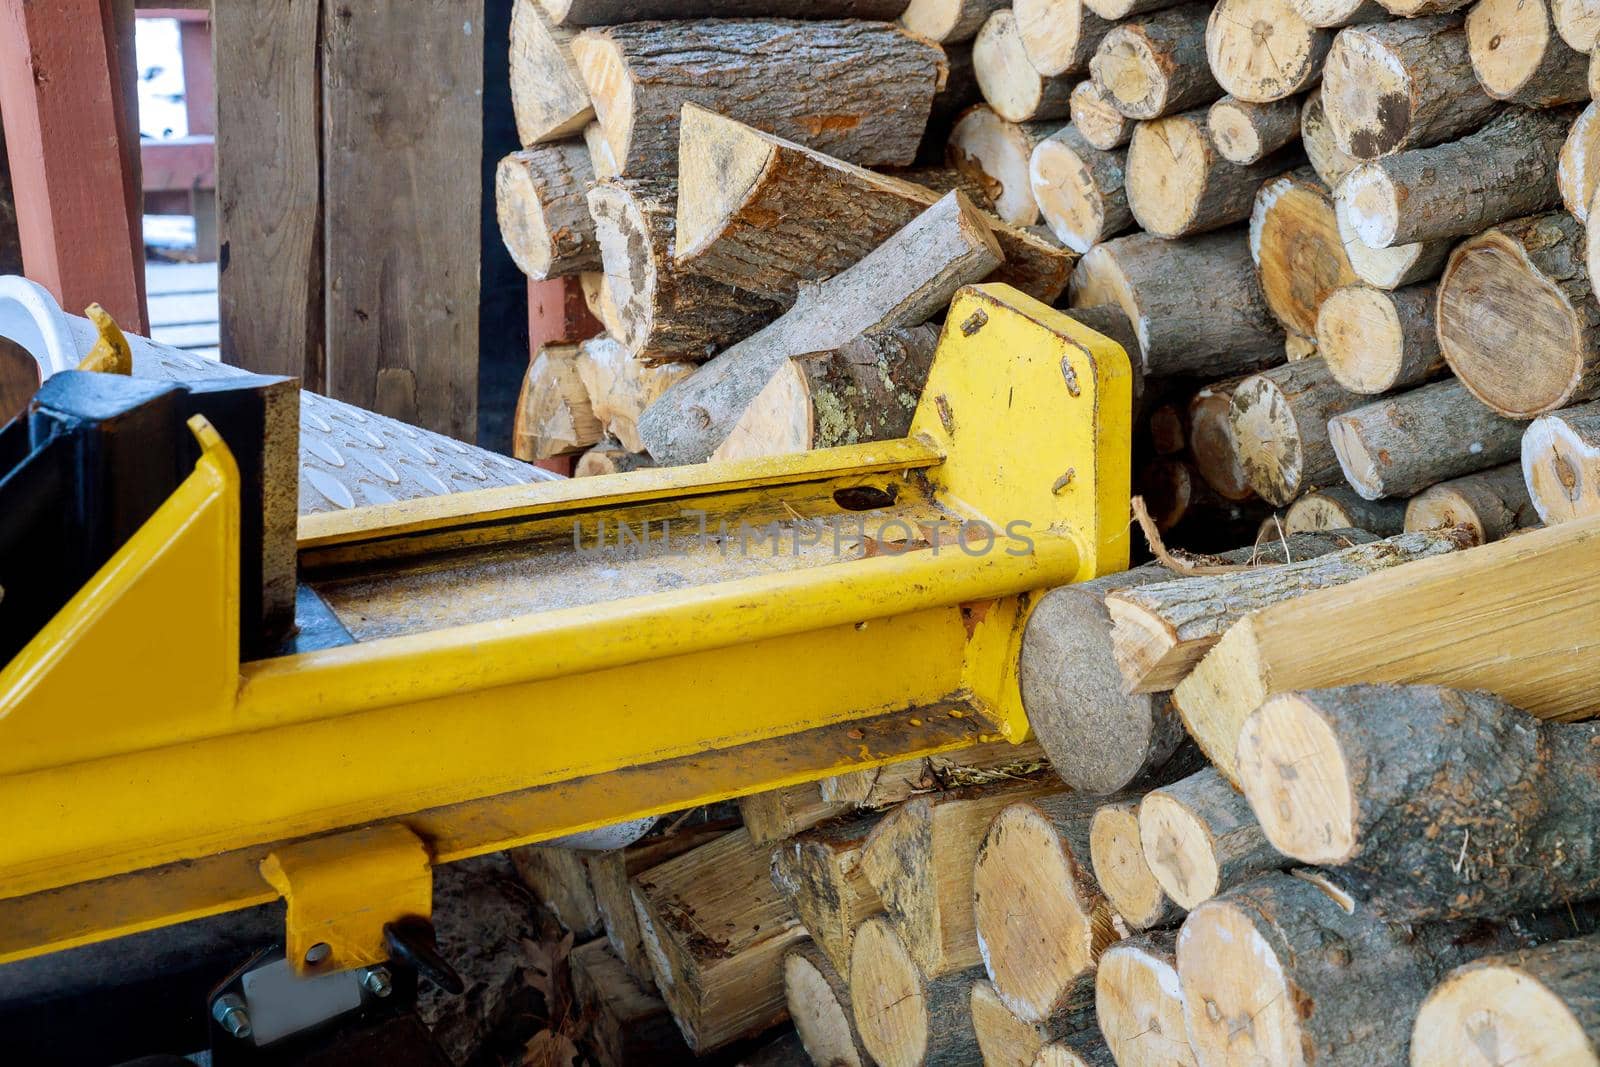 Splitter machine with person splitting firewood to split the logs